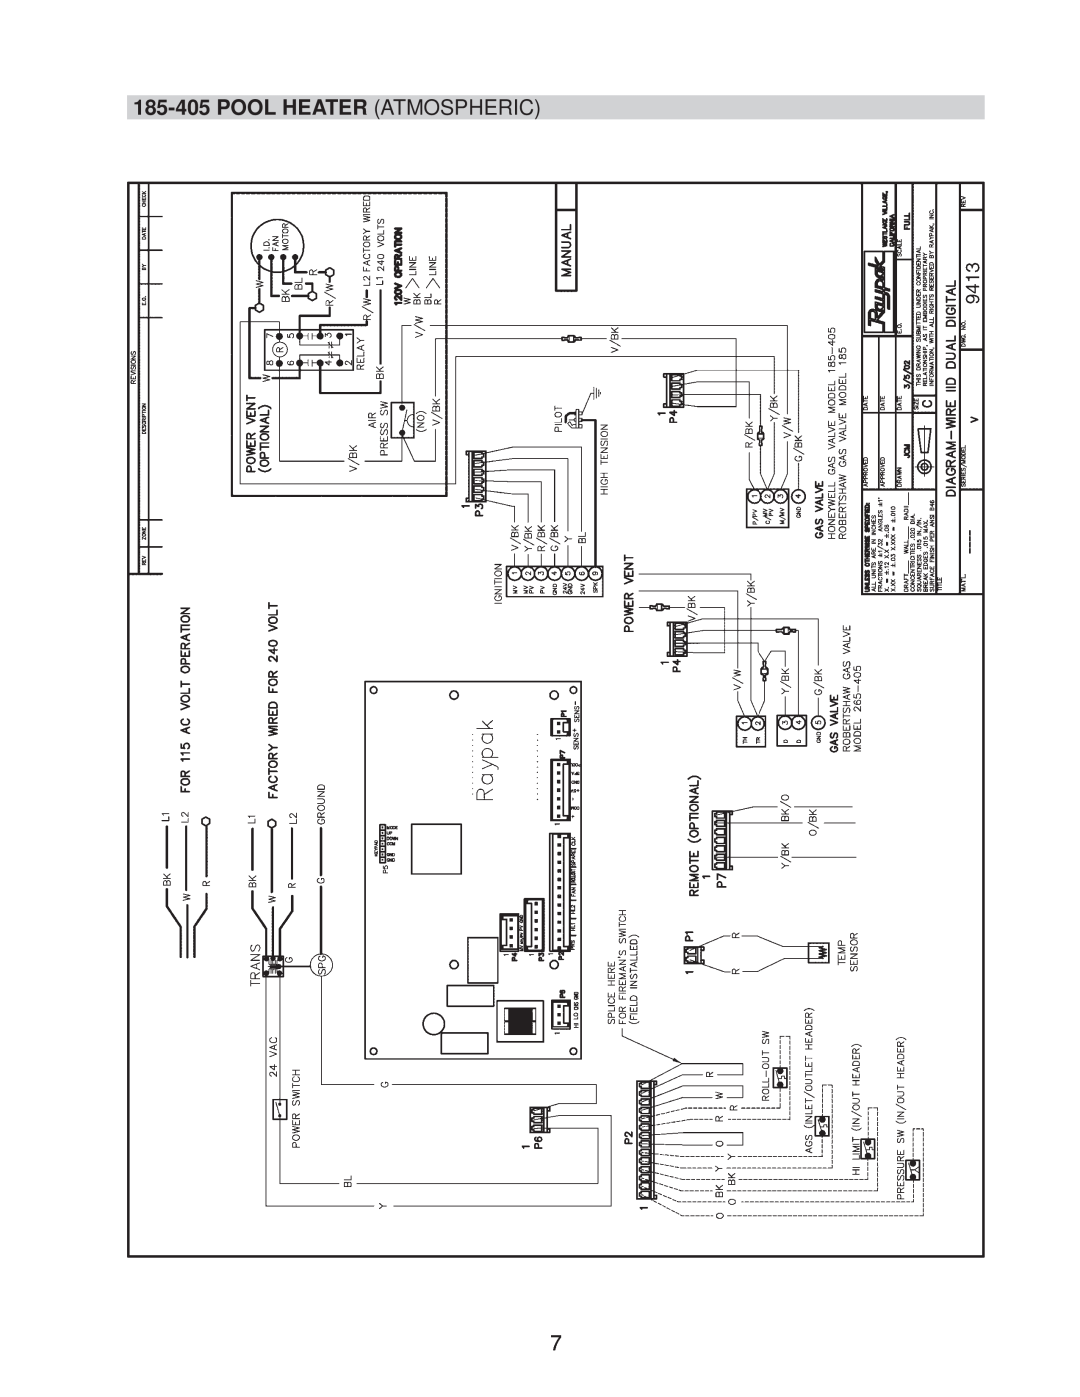 Raypak 265, 335 installation instructions 185-405POOL HEATER ATMOSPHERIC 